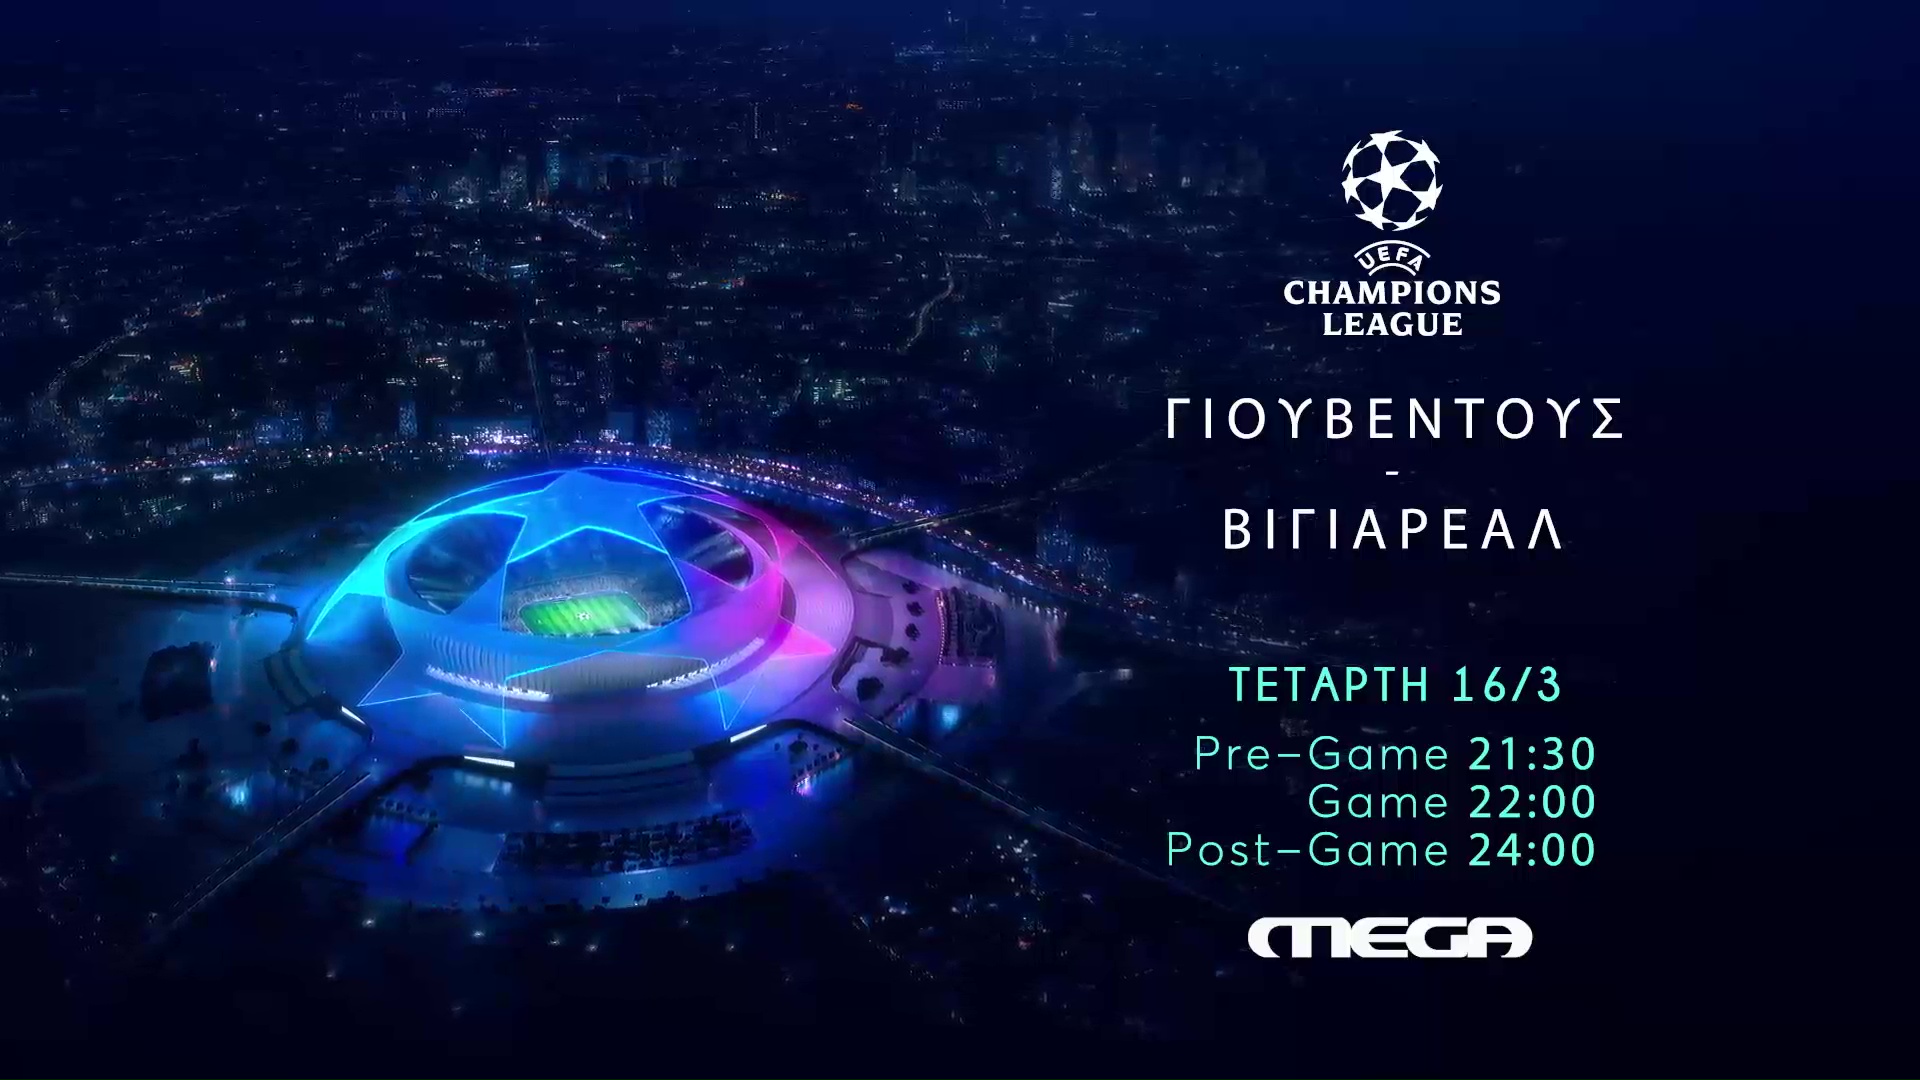 UEFA CHAMPIONS LEAGUE: ΓΙΟΥΒΕΝΤΟΥΣ – ΒΙΓΙΑΡΕΑΛ ΣΤΟ MEGΑ